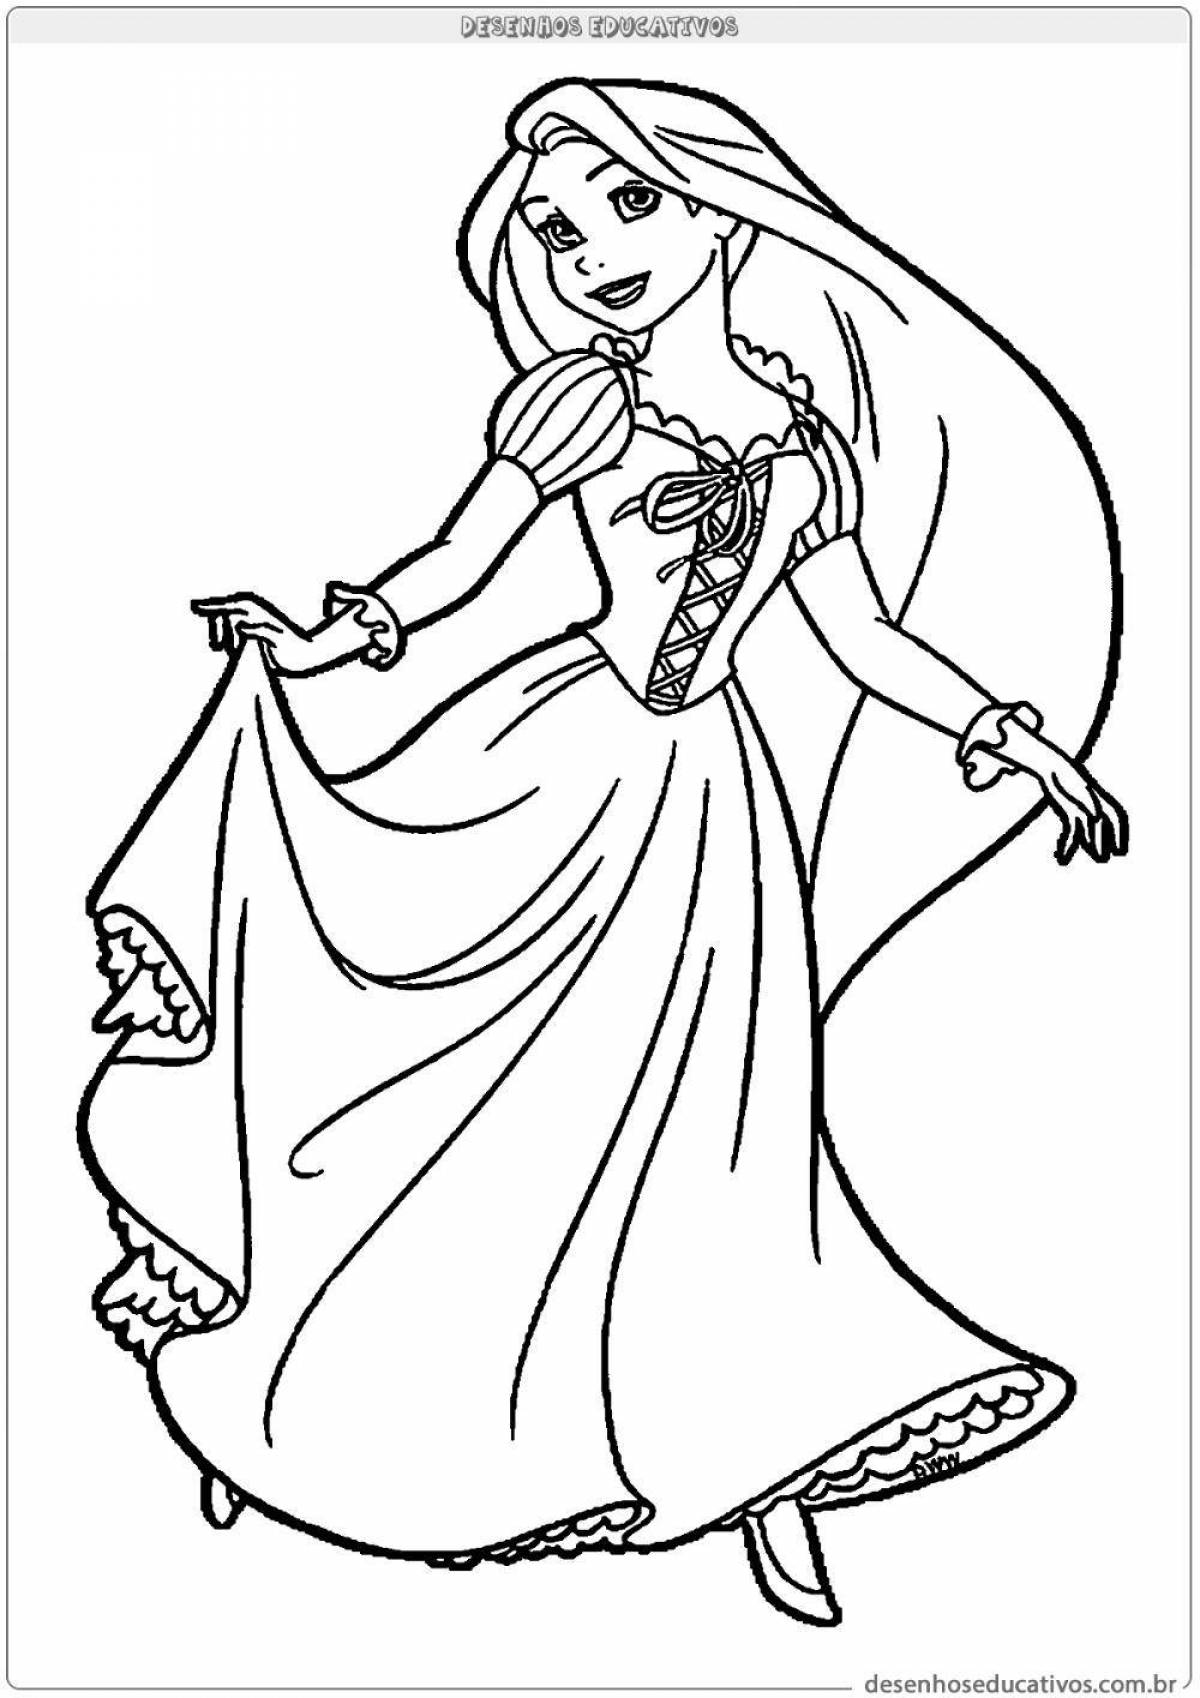 Shiny princess with long hair coloring book